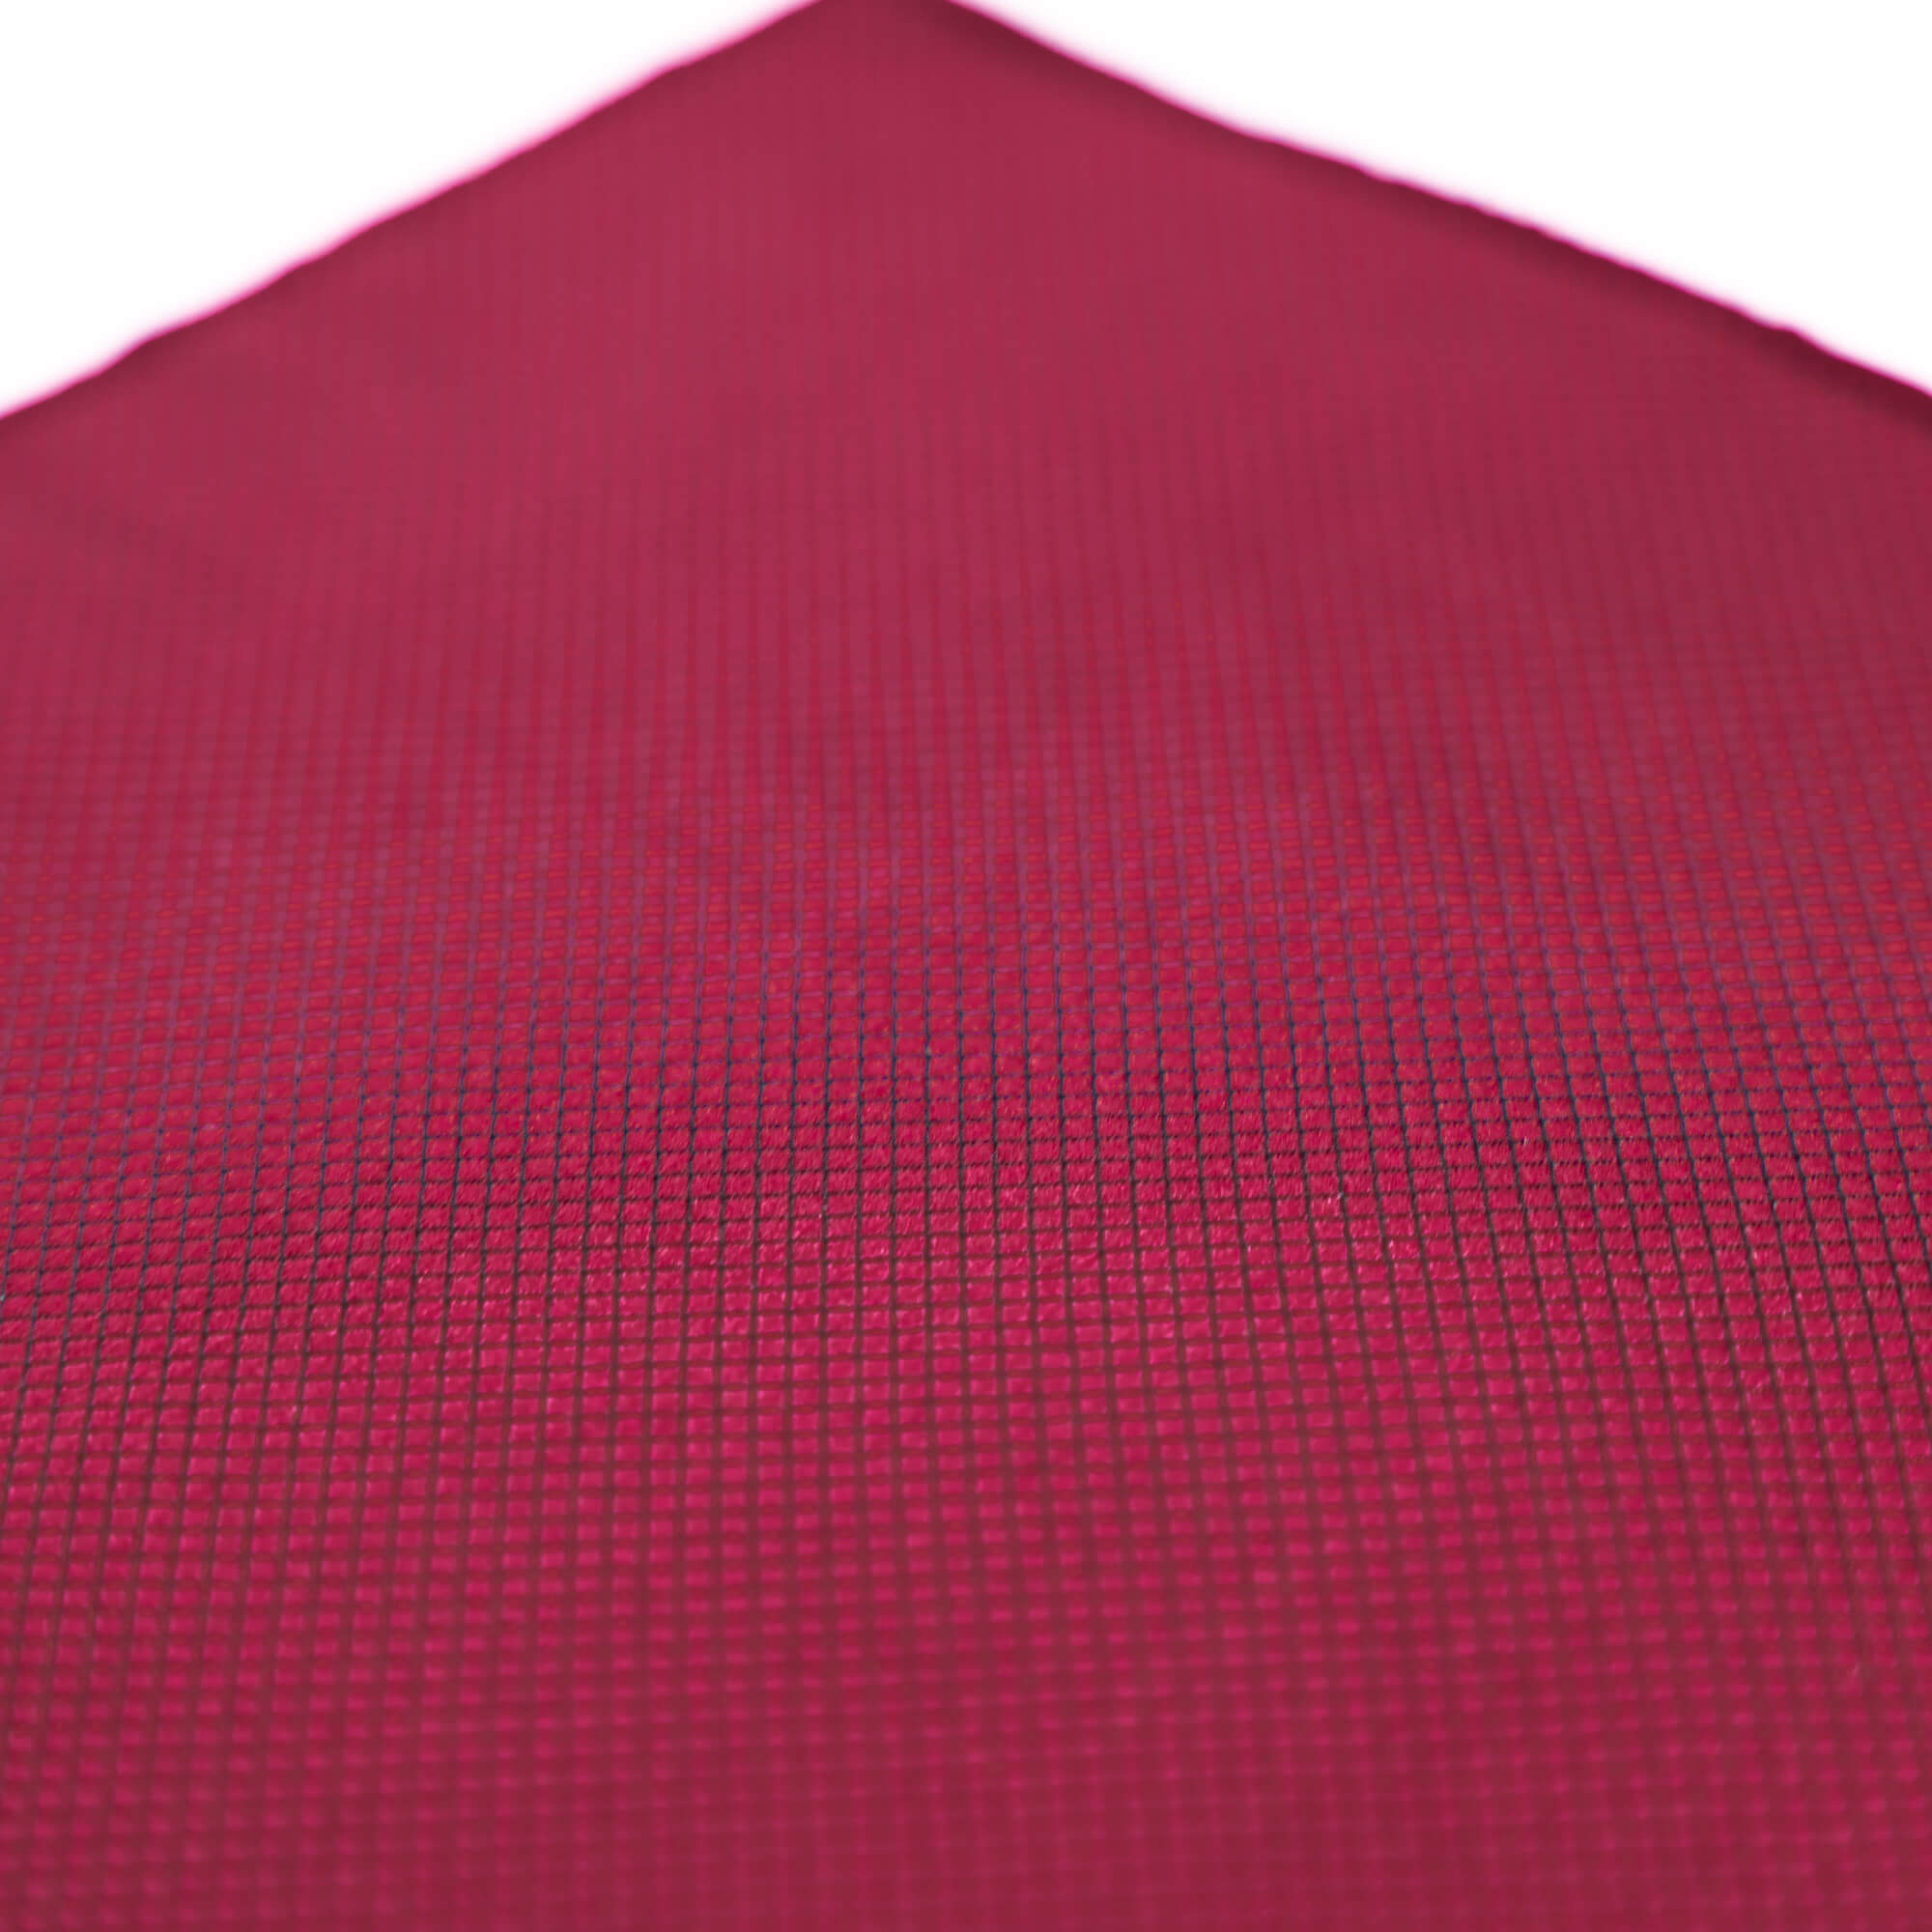 Red burgundy silk pocket square